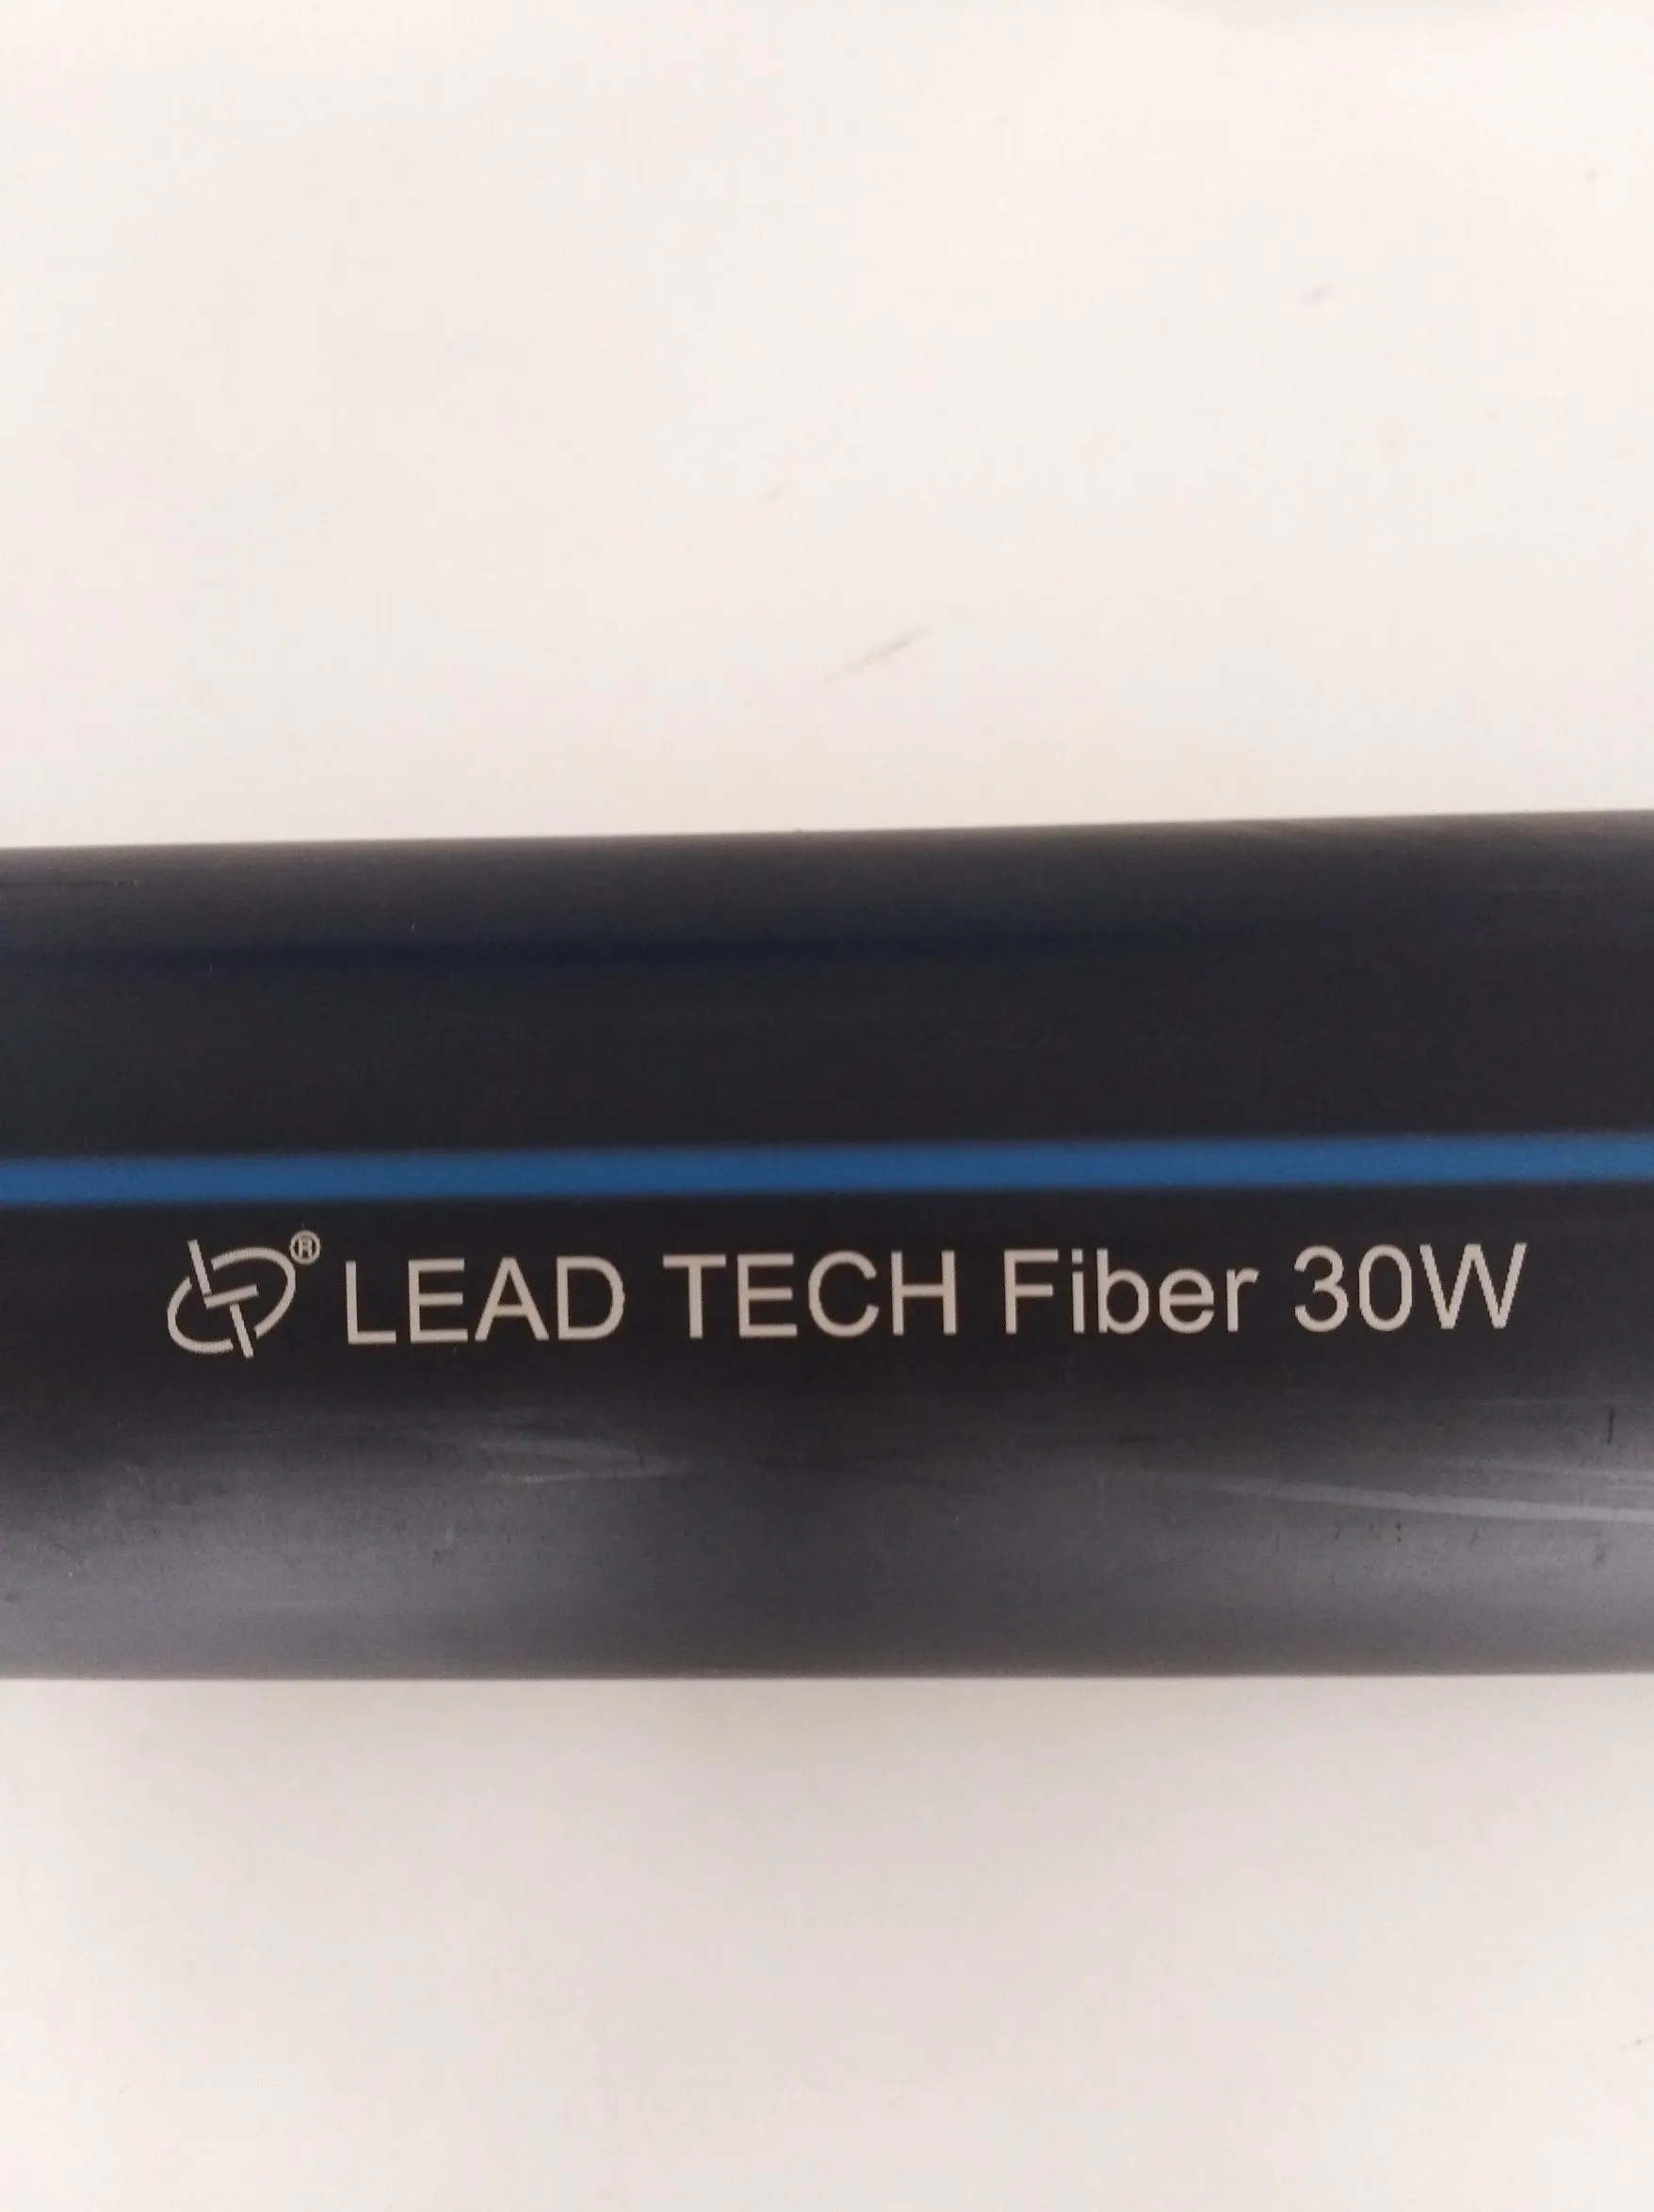 Lt8020f/Lt8030f/Lt8050f Fiber High Speed Qr Code Date Character Laser Printer for Cables and Plastics